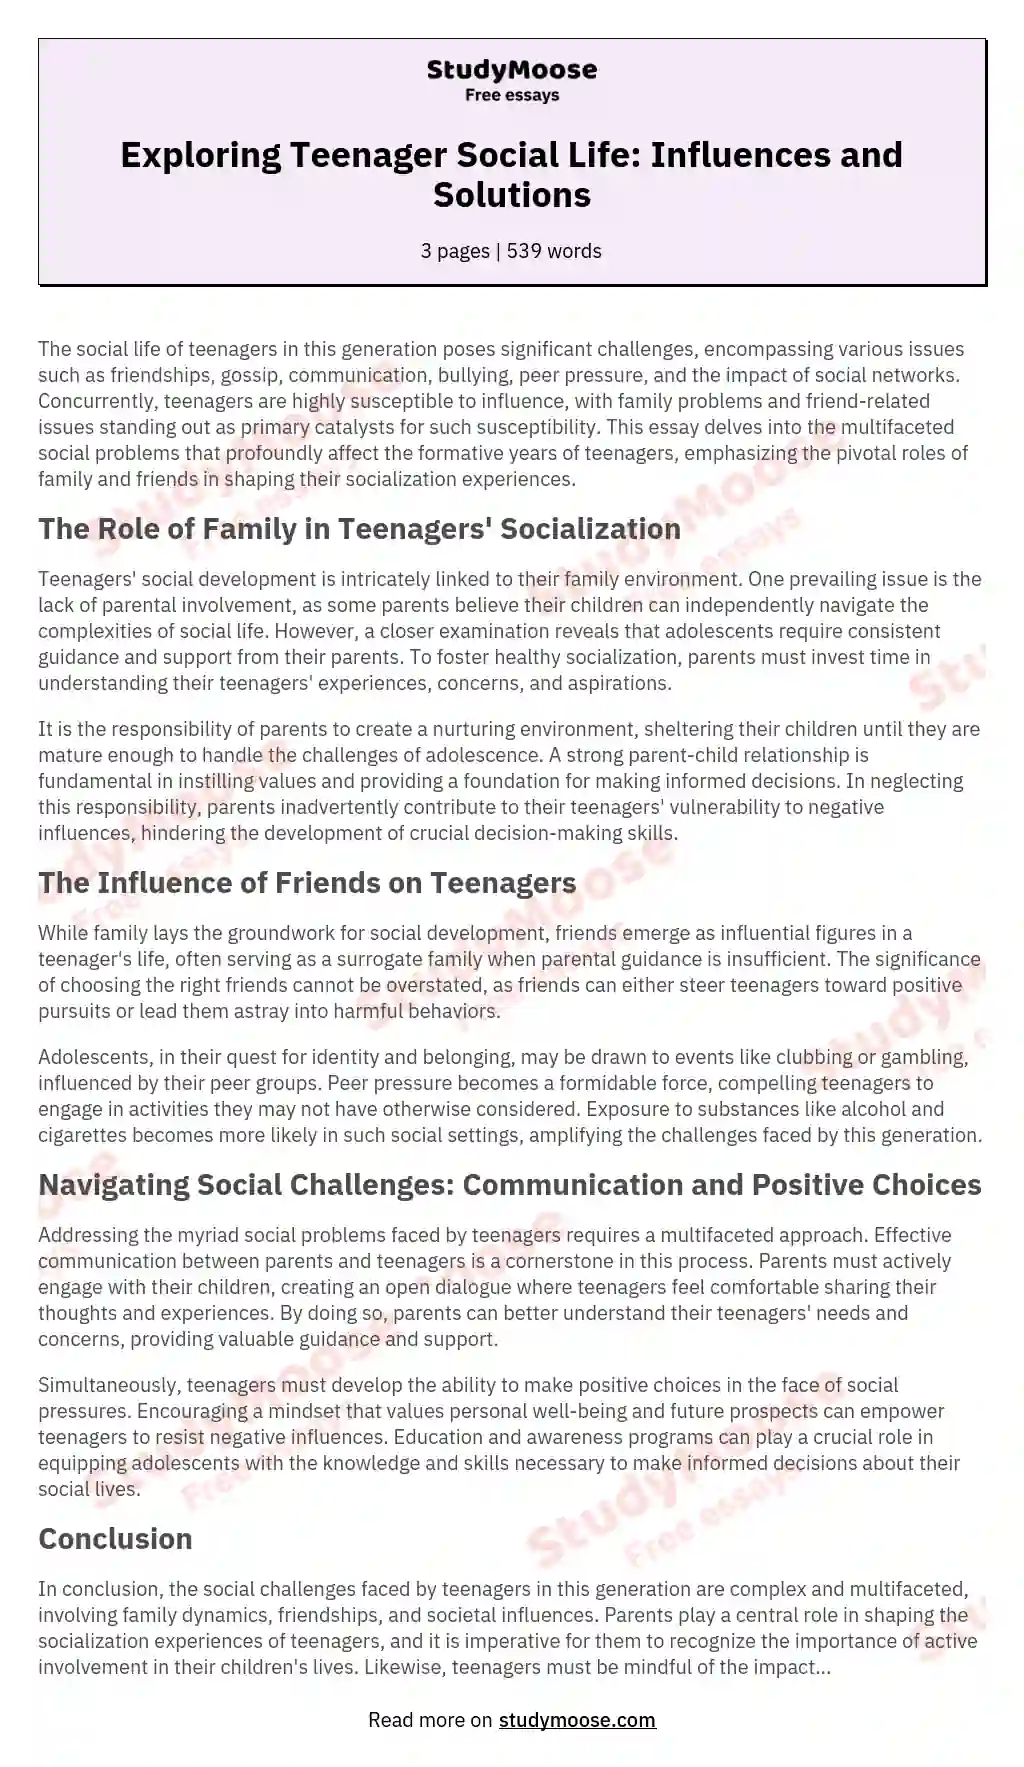 Exploring Teenager Social Life: Influences and Solutions essay